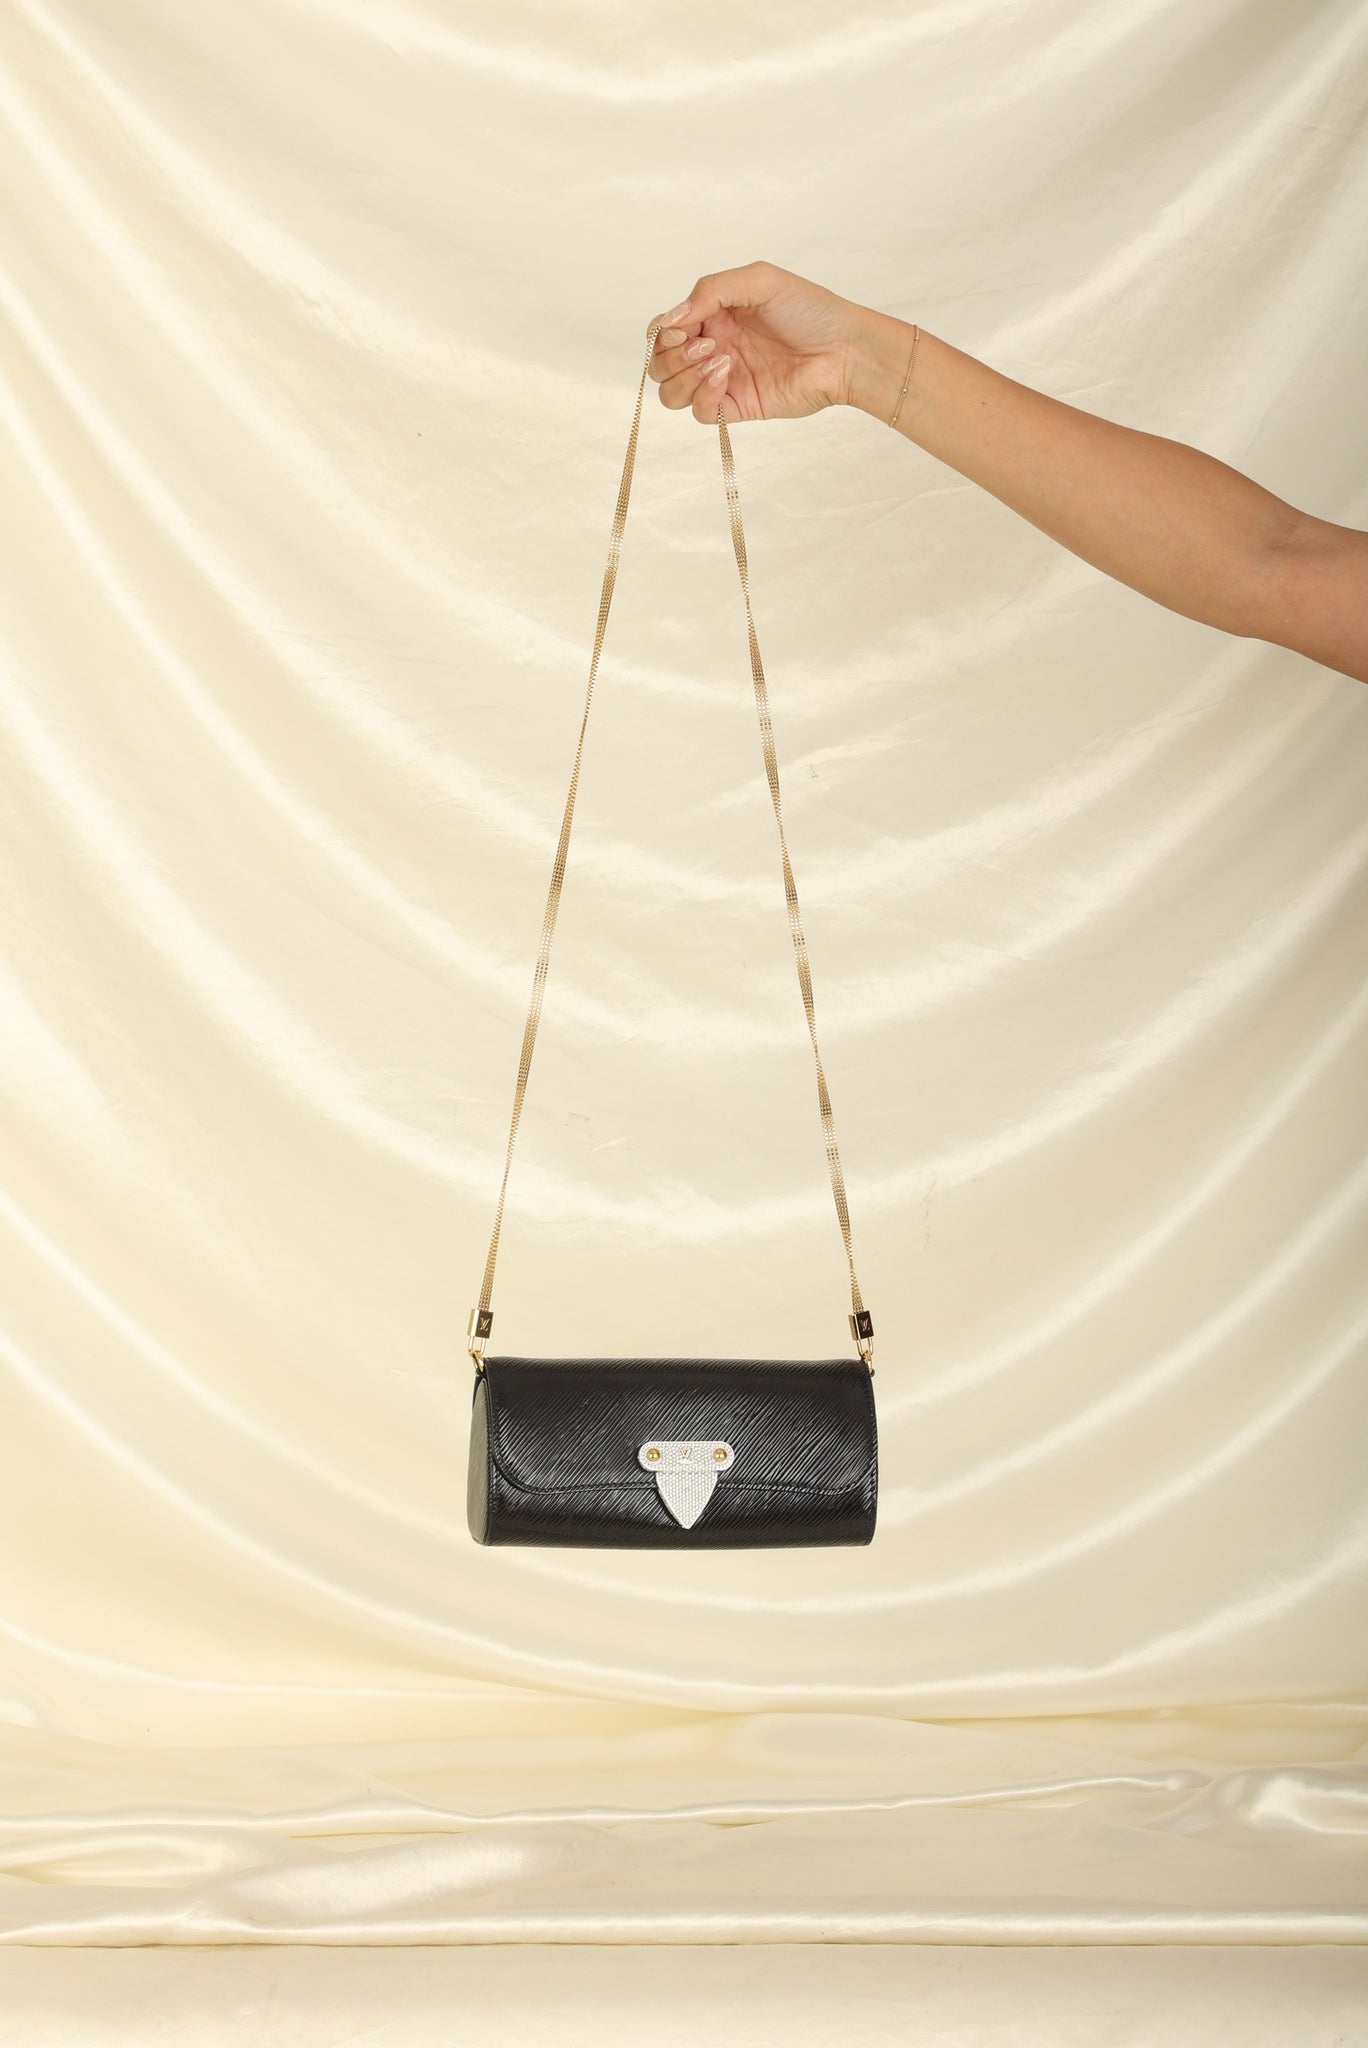 Ultra-Rare Louis Vuitton 2017 Electric Epi Crystal Chain Bag – SFN